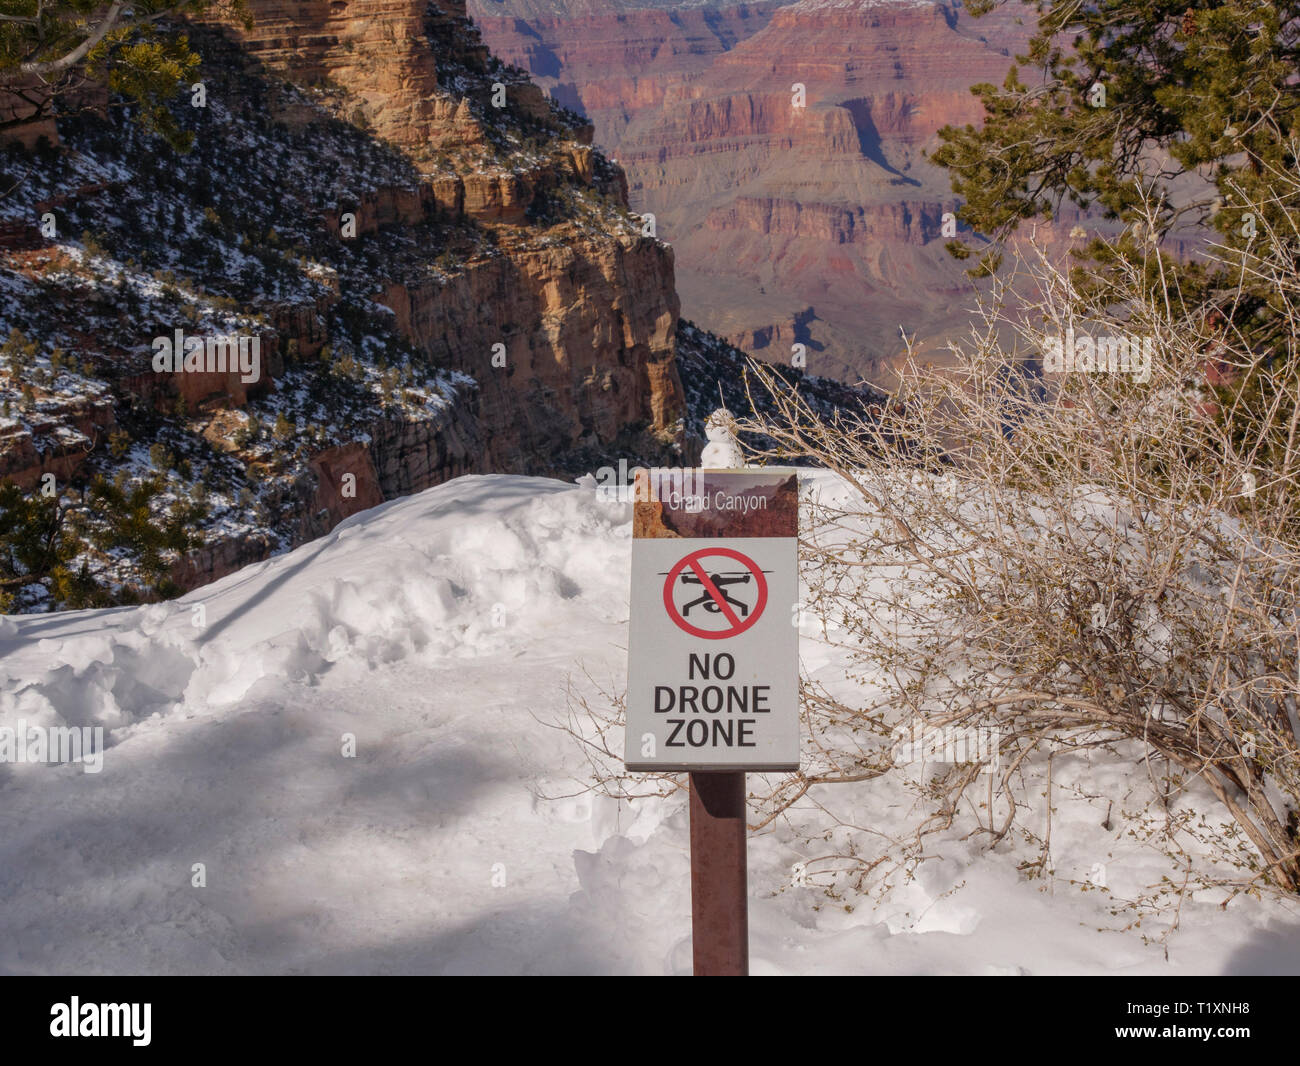 No drone zone sign. Grand Canyon National Park, Arizona. Stock Photo